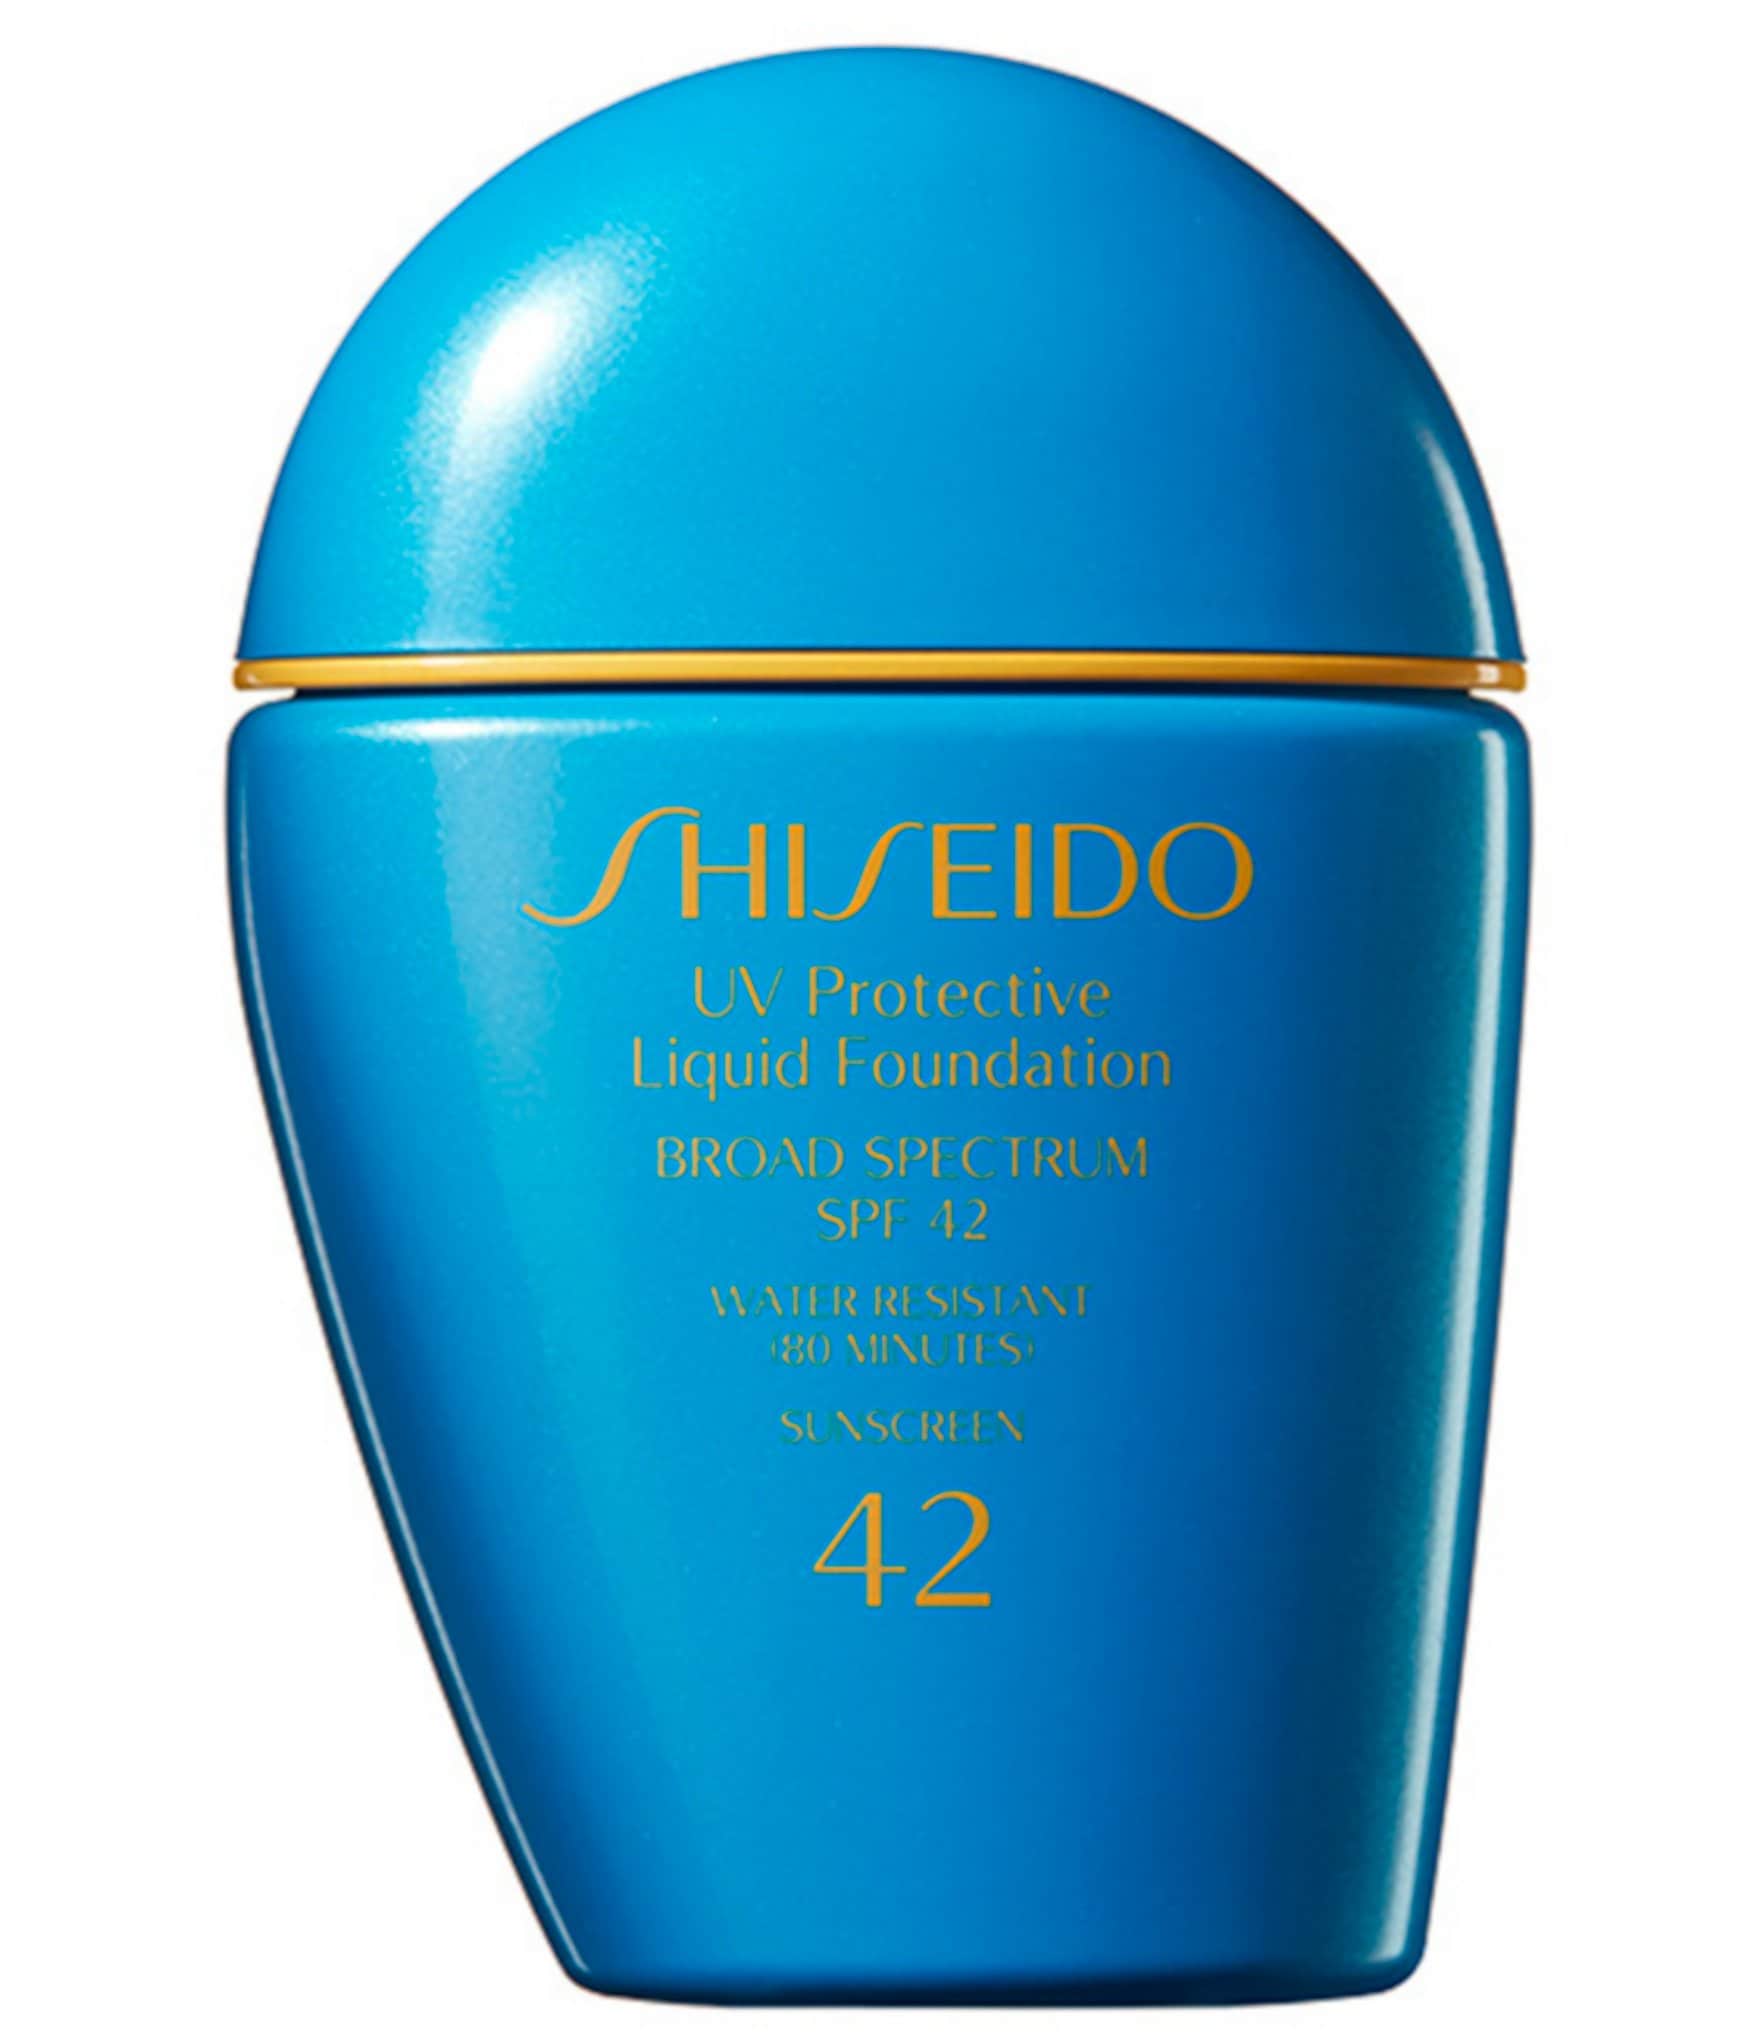 Shiseido UV Protective Liquid Foundation SPF 42 | Dillards